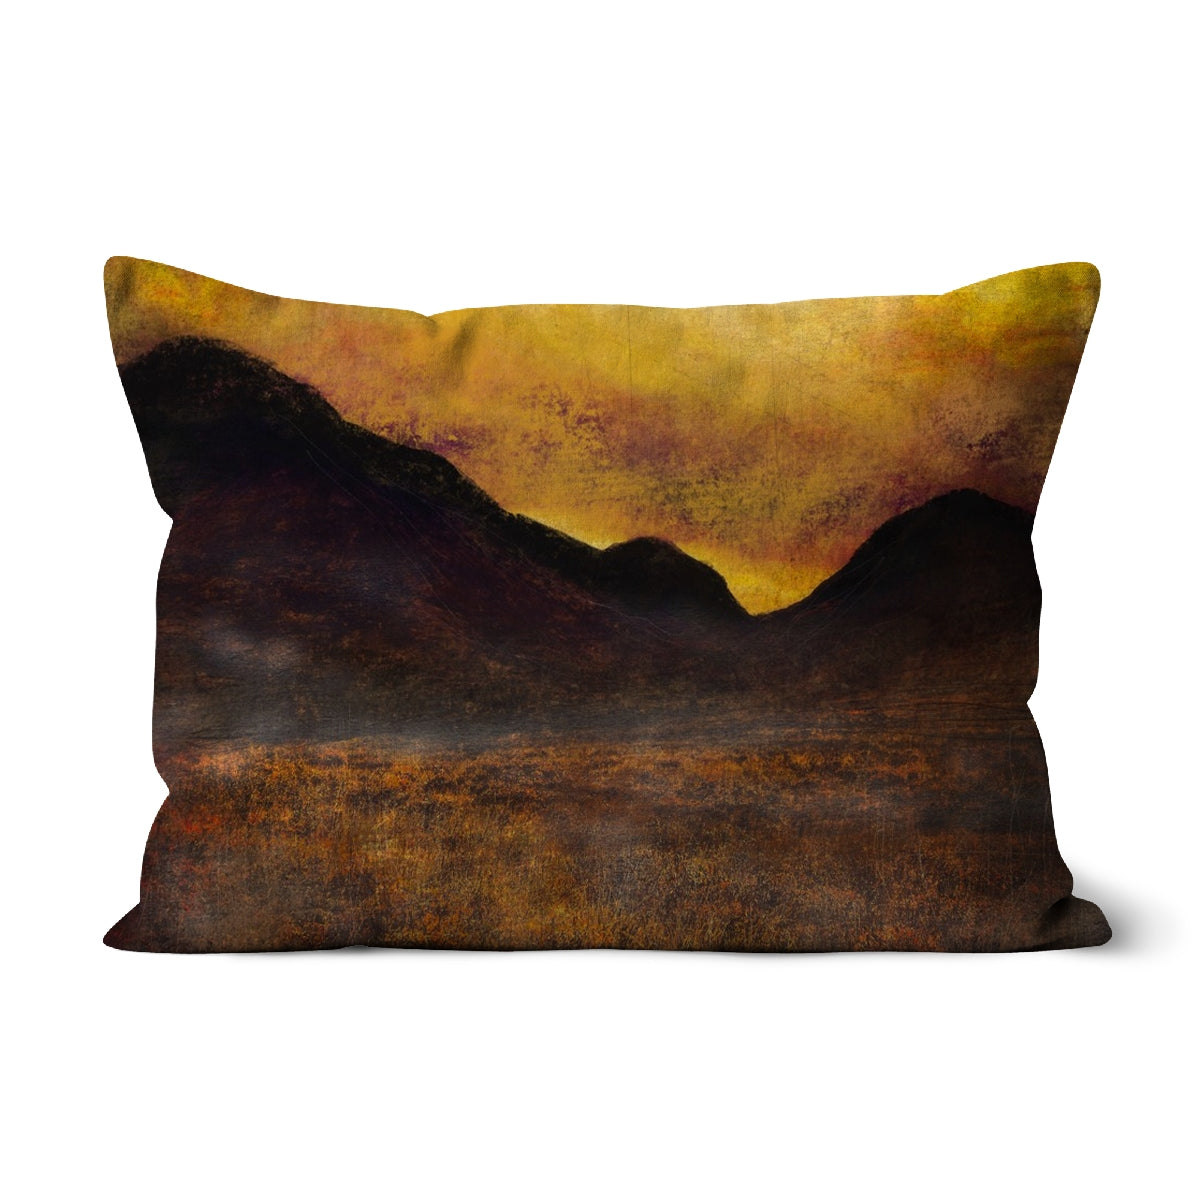 Glencoe Moonlight Art Gifts Cushion-Cushions-Glencoe Art Gallery-Canvas-19"x13"-Paintings, Prints, Homeware, Art Gifts From Scotland By Scottish Artist Kevin Hunter